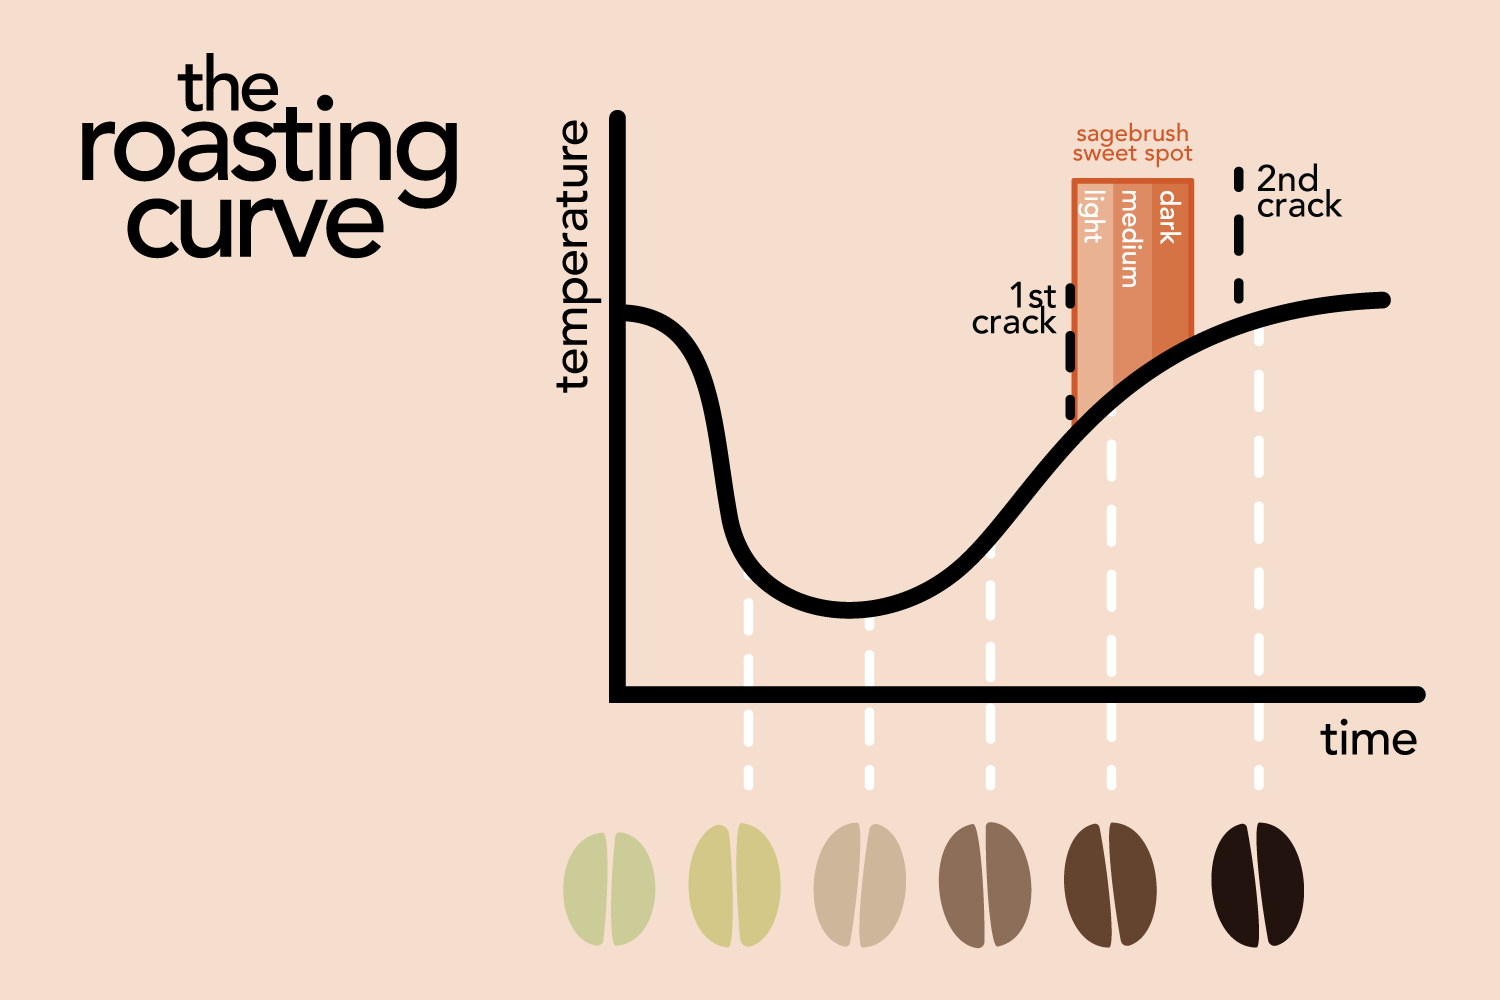 Sagebrush Coffee representation of the common roasting curve of coffee